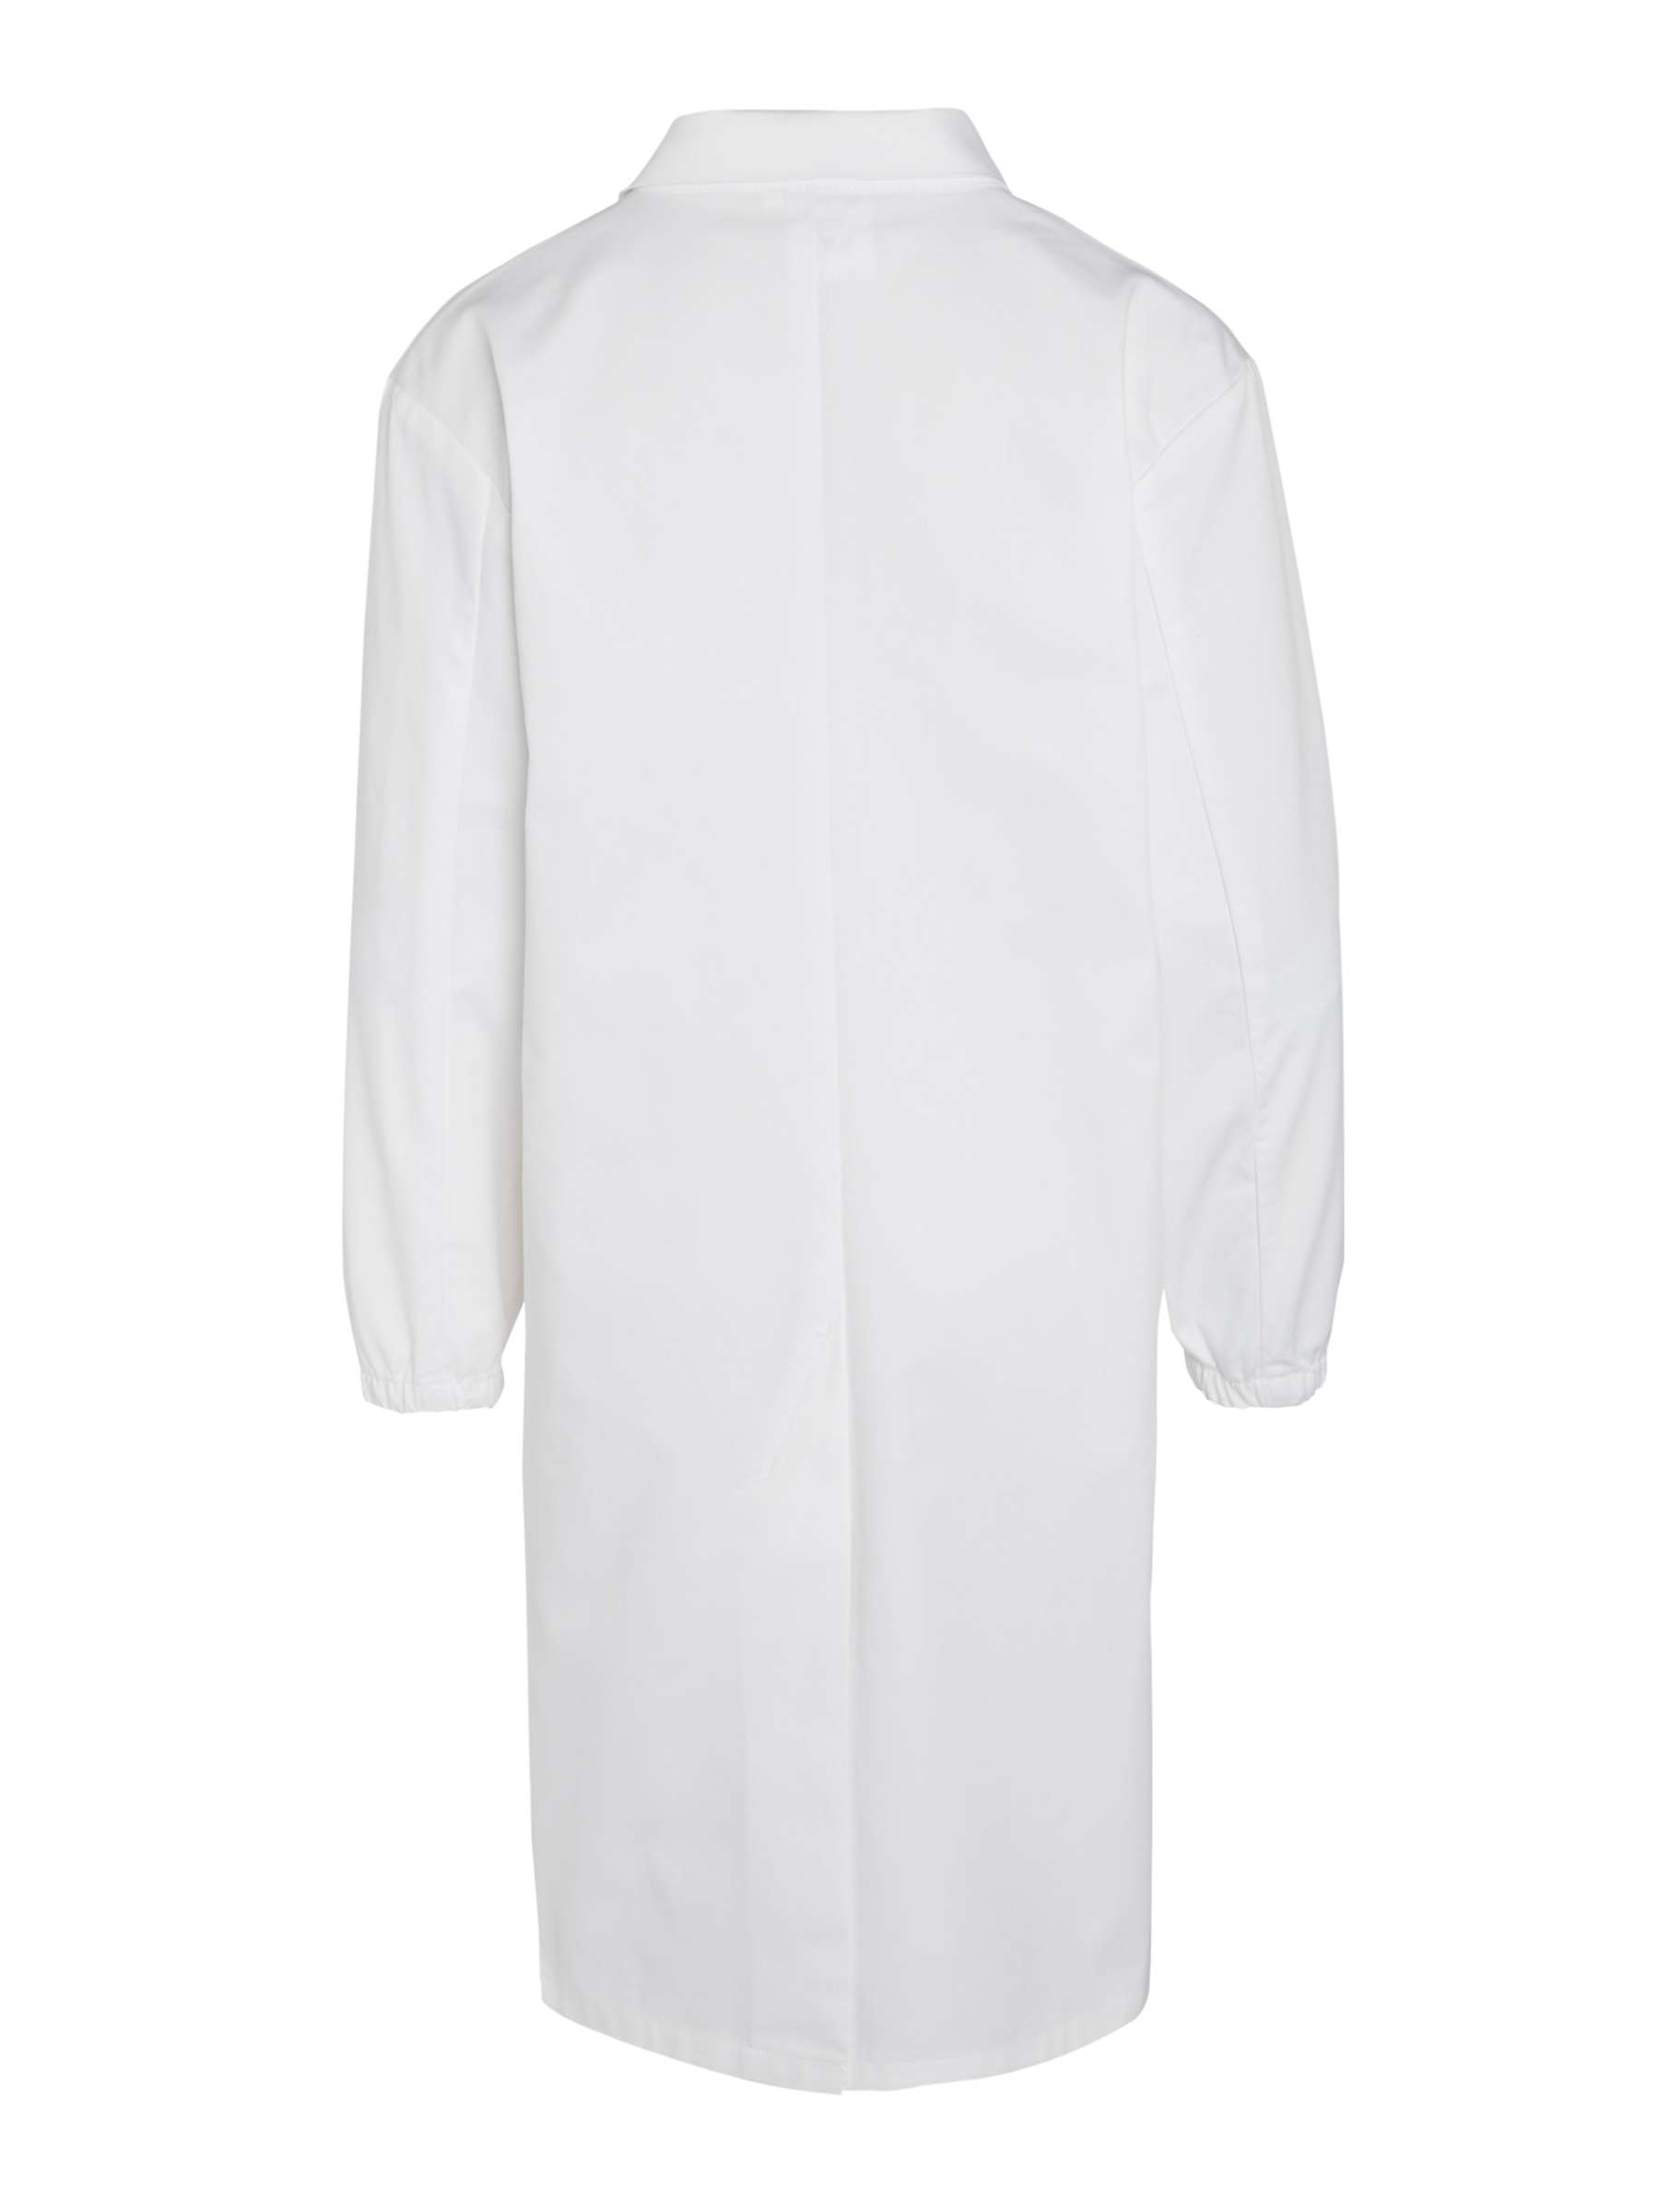 Buy Dartford Grammar School Laboratory Coat, White Online at johnlewis.com